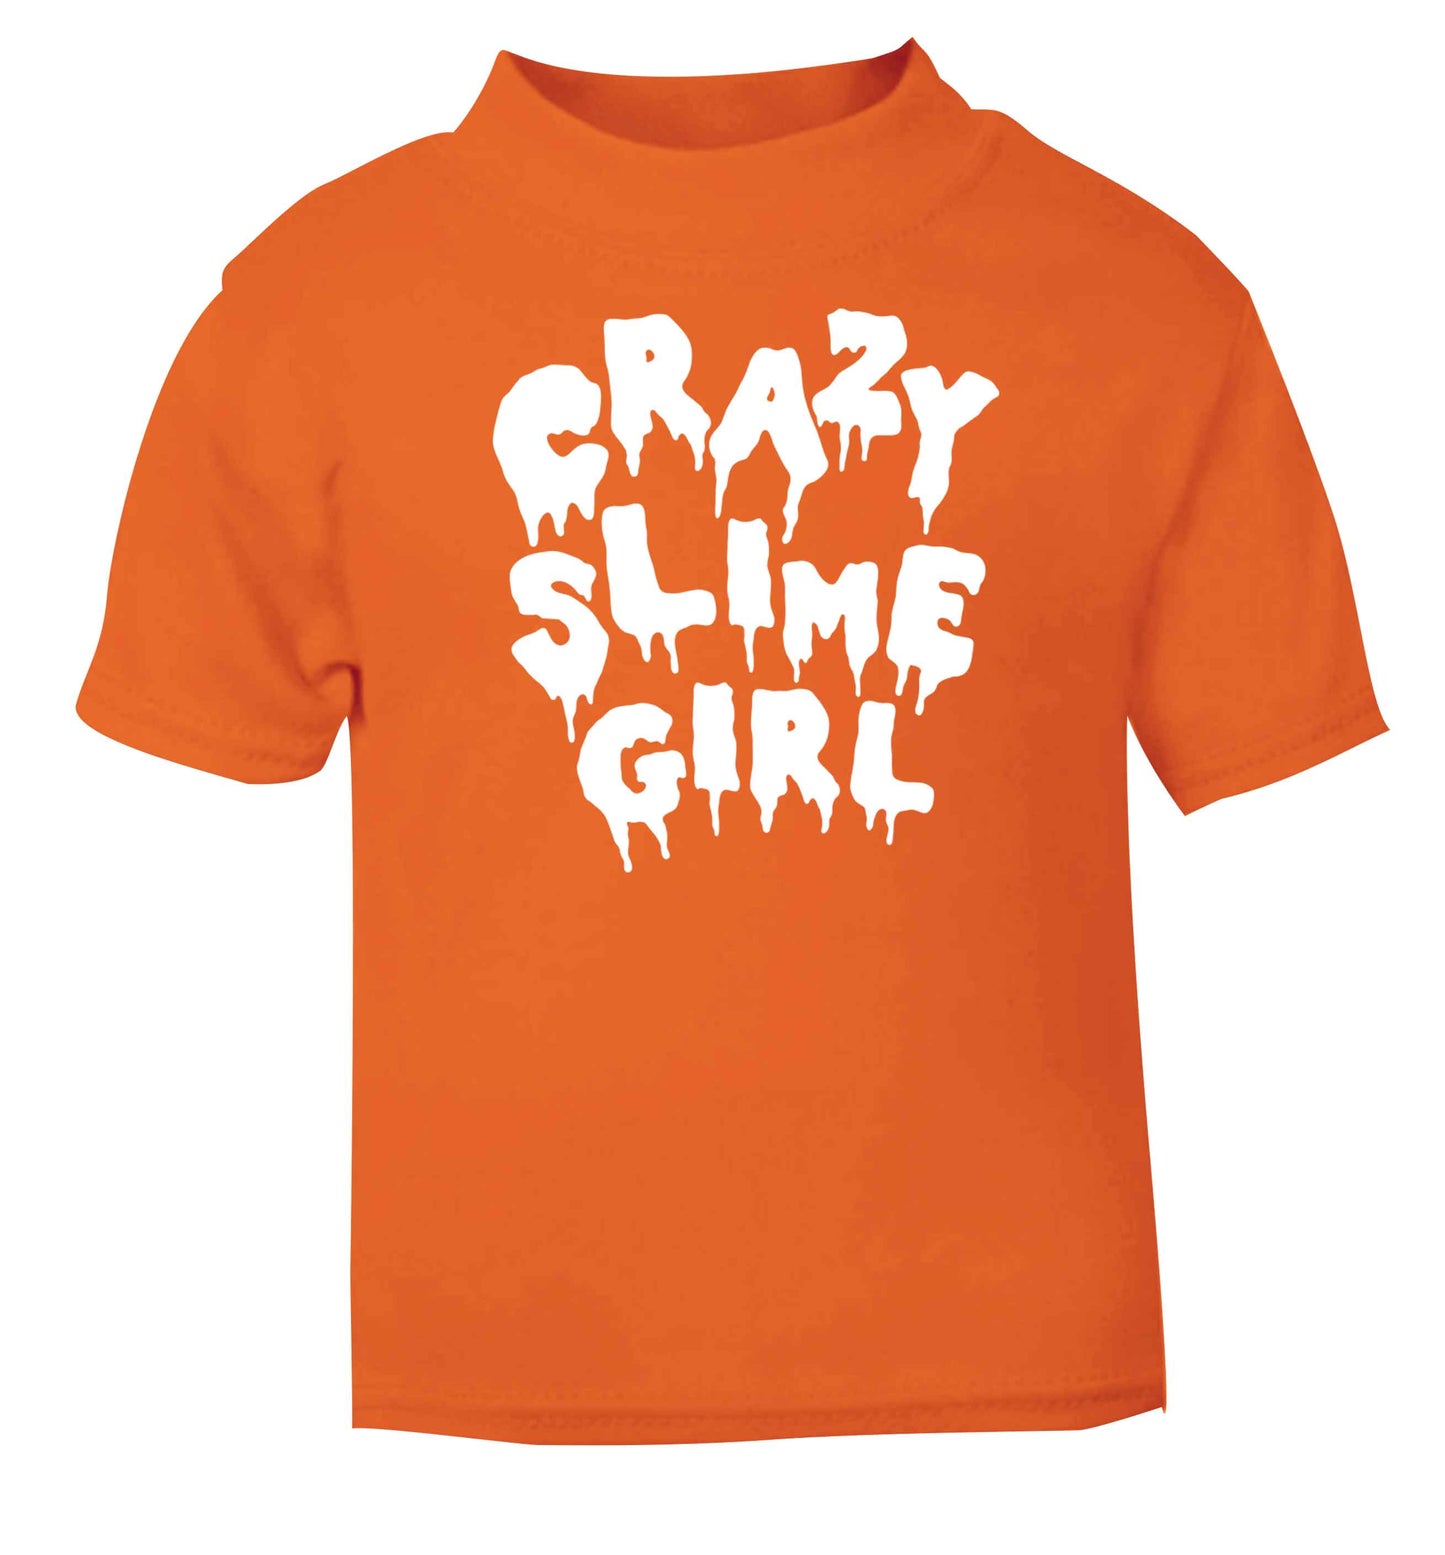 Crazy slime girl orange baby toddler Tshirt 2 Years